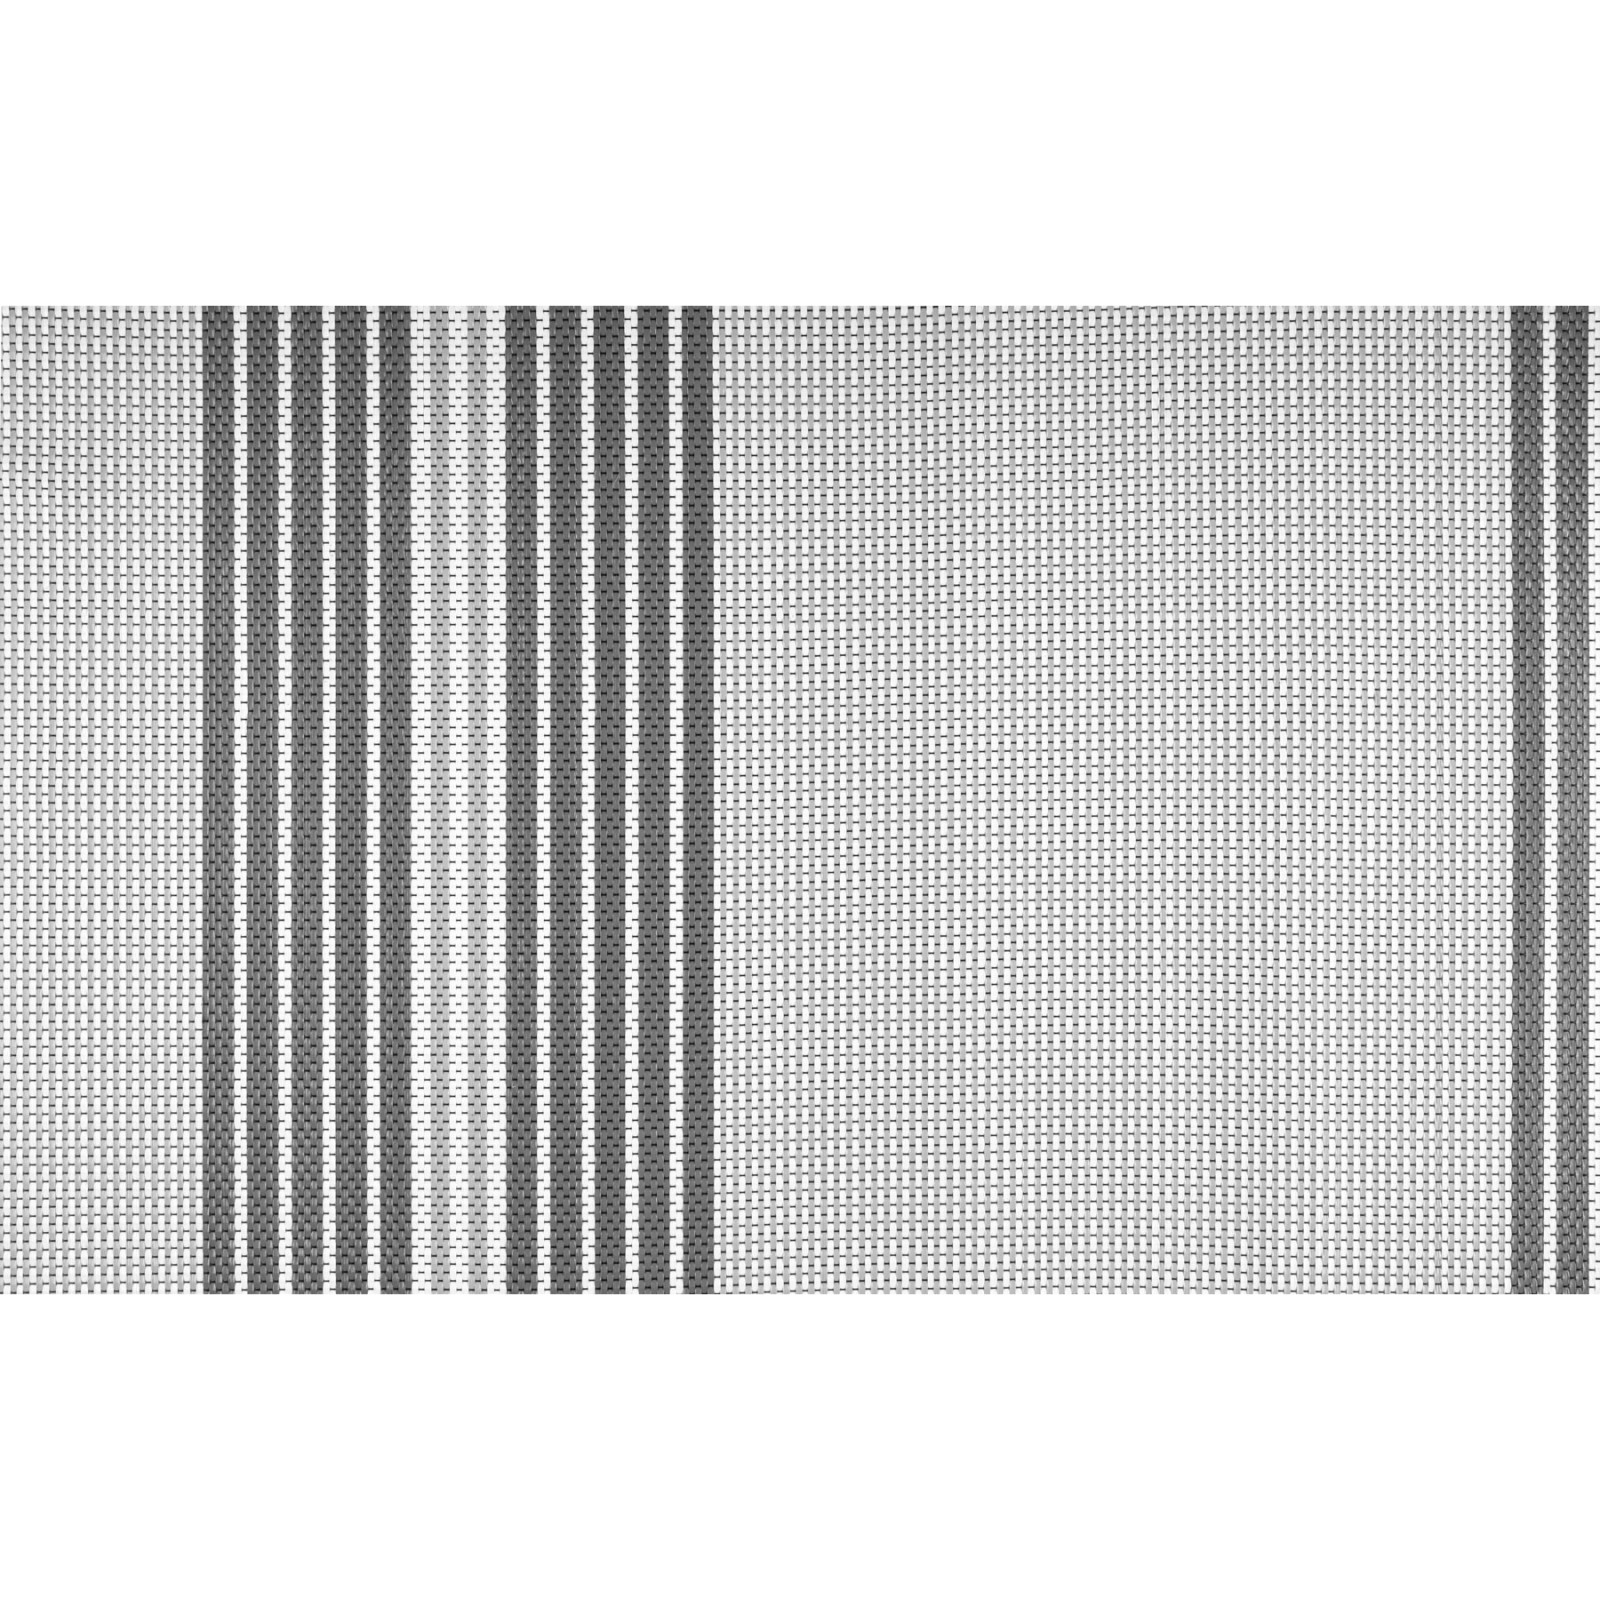 Podlážka Brunner Kinetic 600 - 250x400 cm Barva: bílá/šedá